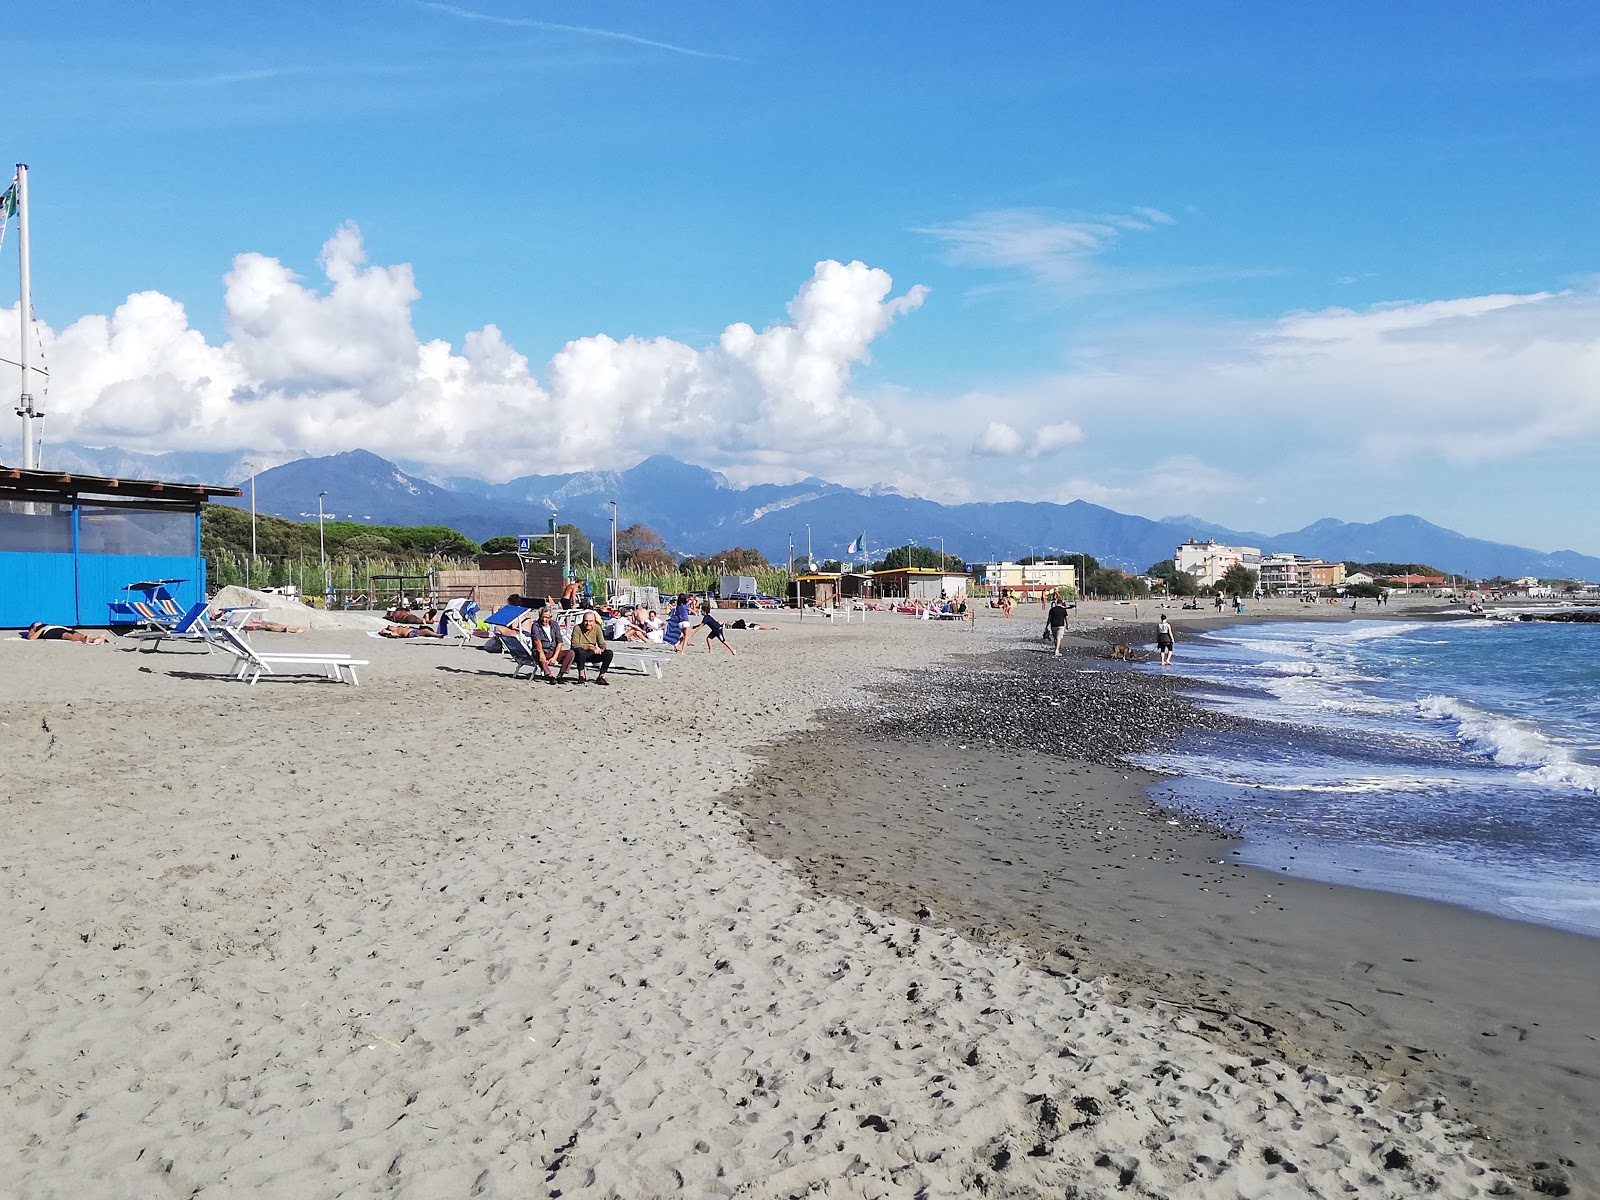 Foto de Spiaggia di Marinella di Sarzana - lugar popular entre os apreciadores de relaxamento